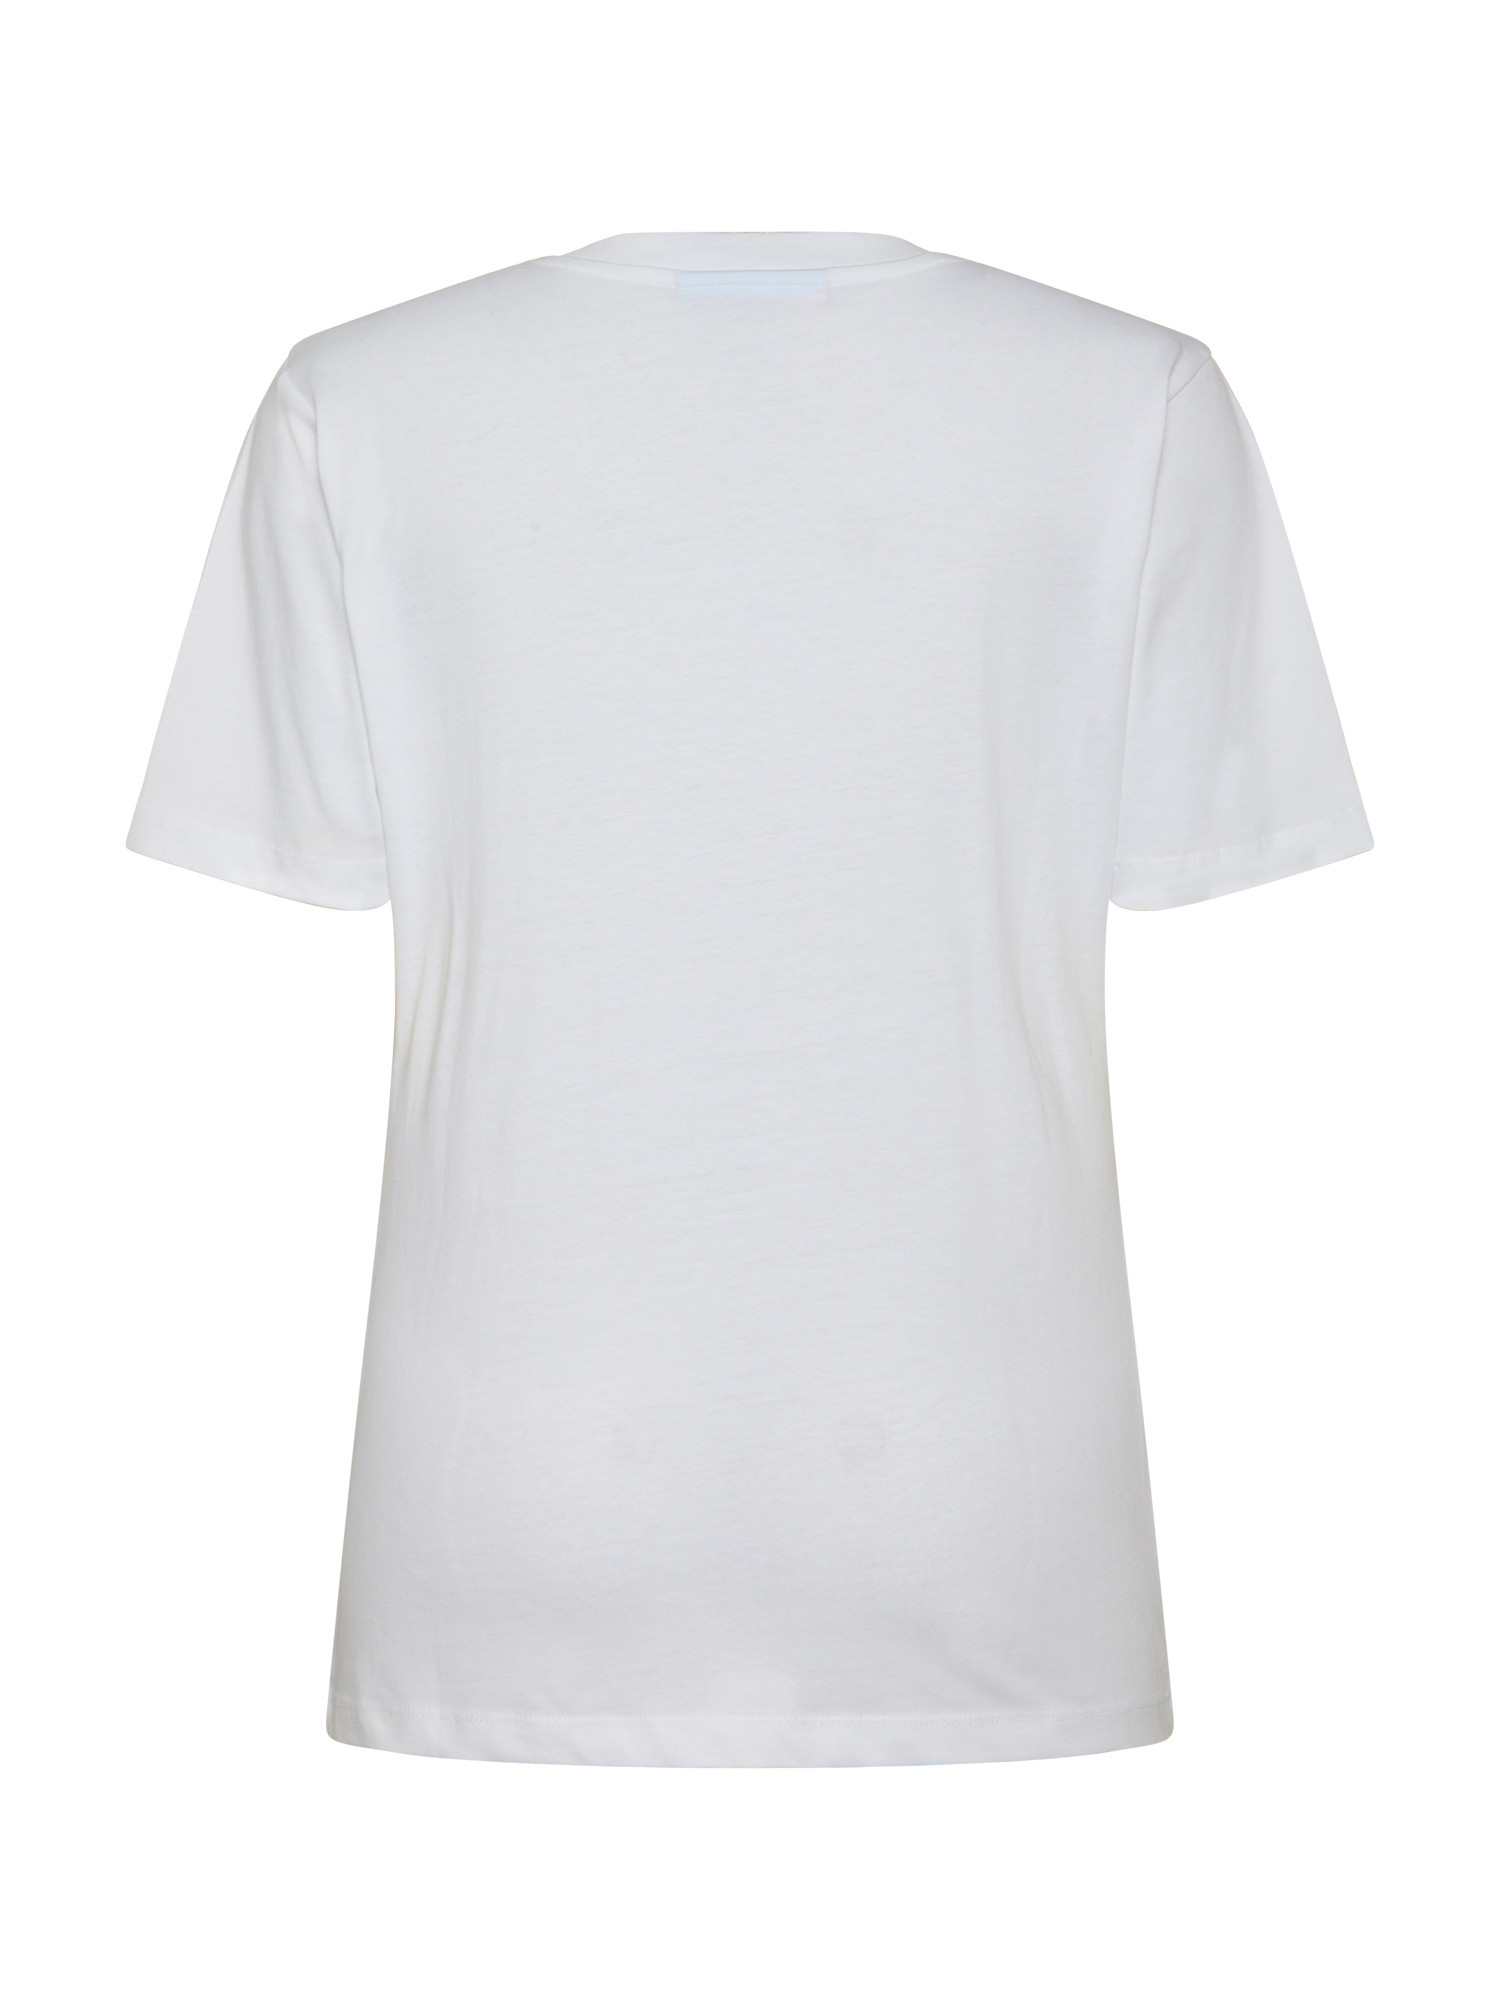 Chiara Ferragni- T-shirt logo ricamato, Bianco, large image number 1